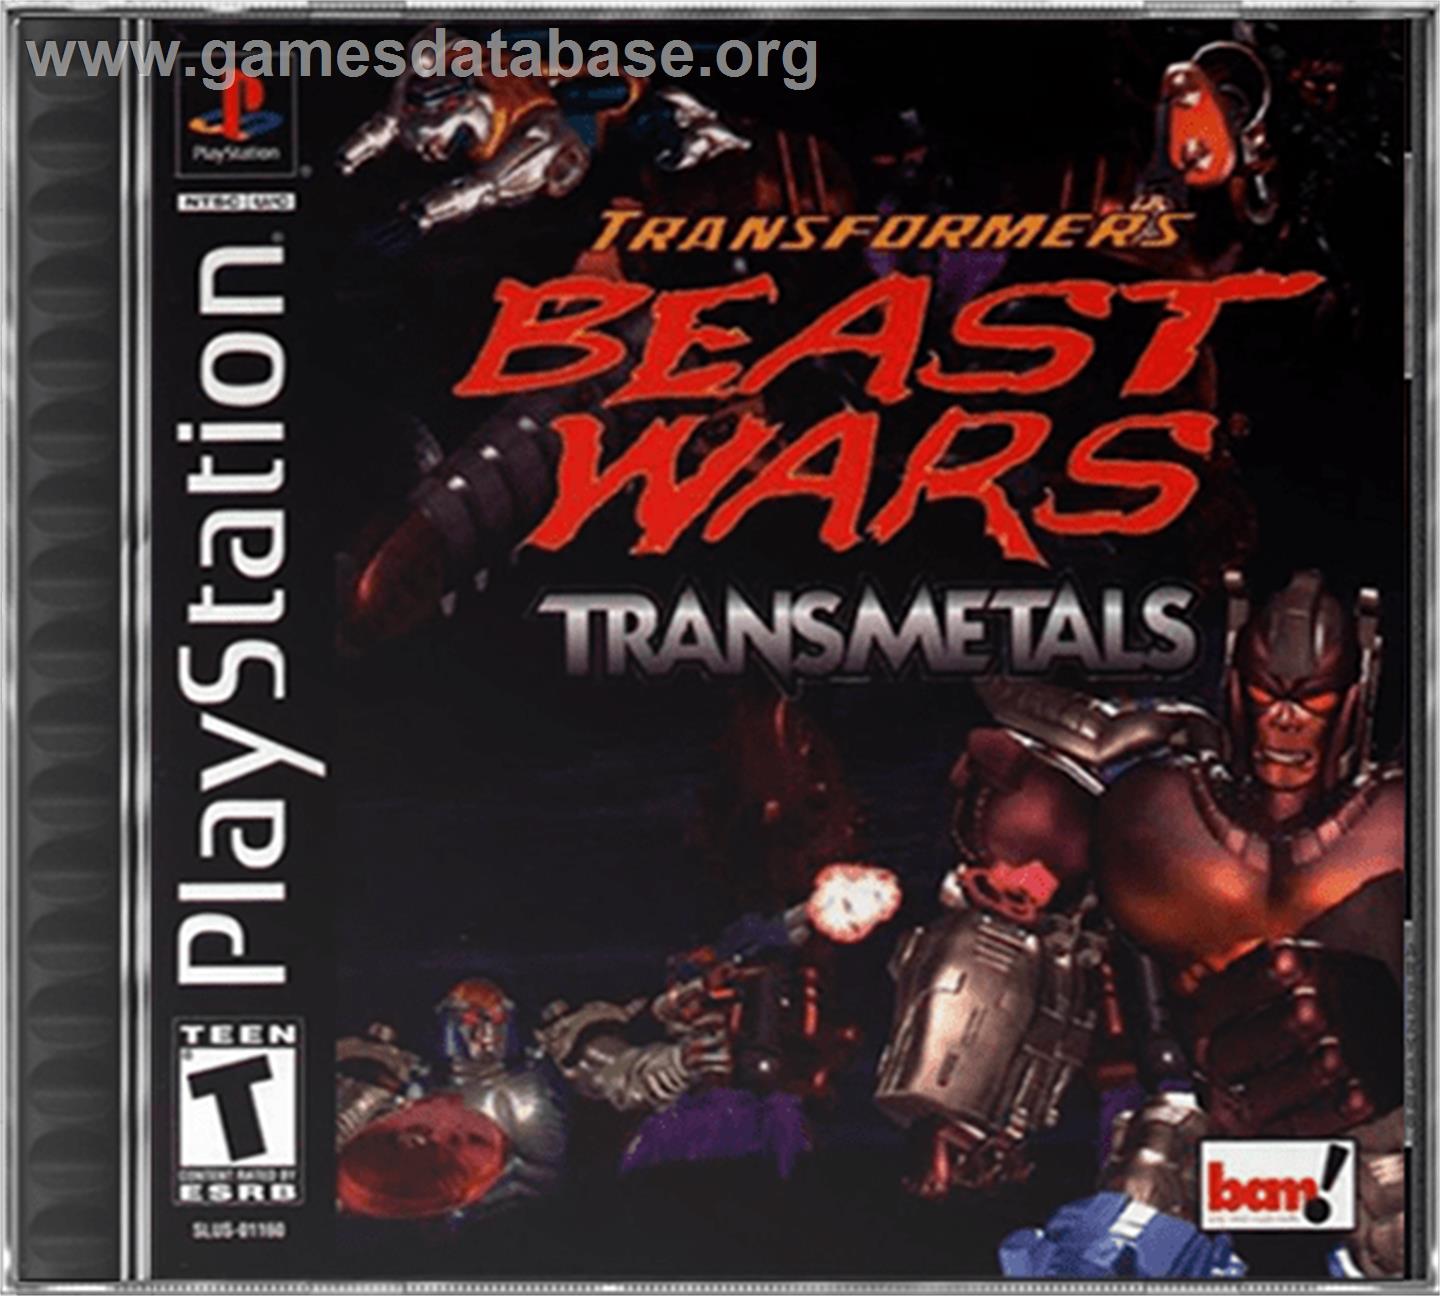 Transformers: Beast Wars Transmetals - Sony Playstation - Artwork - Box